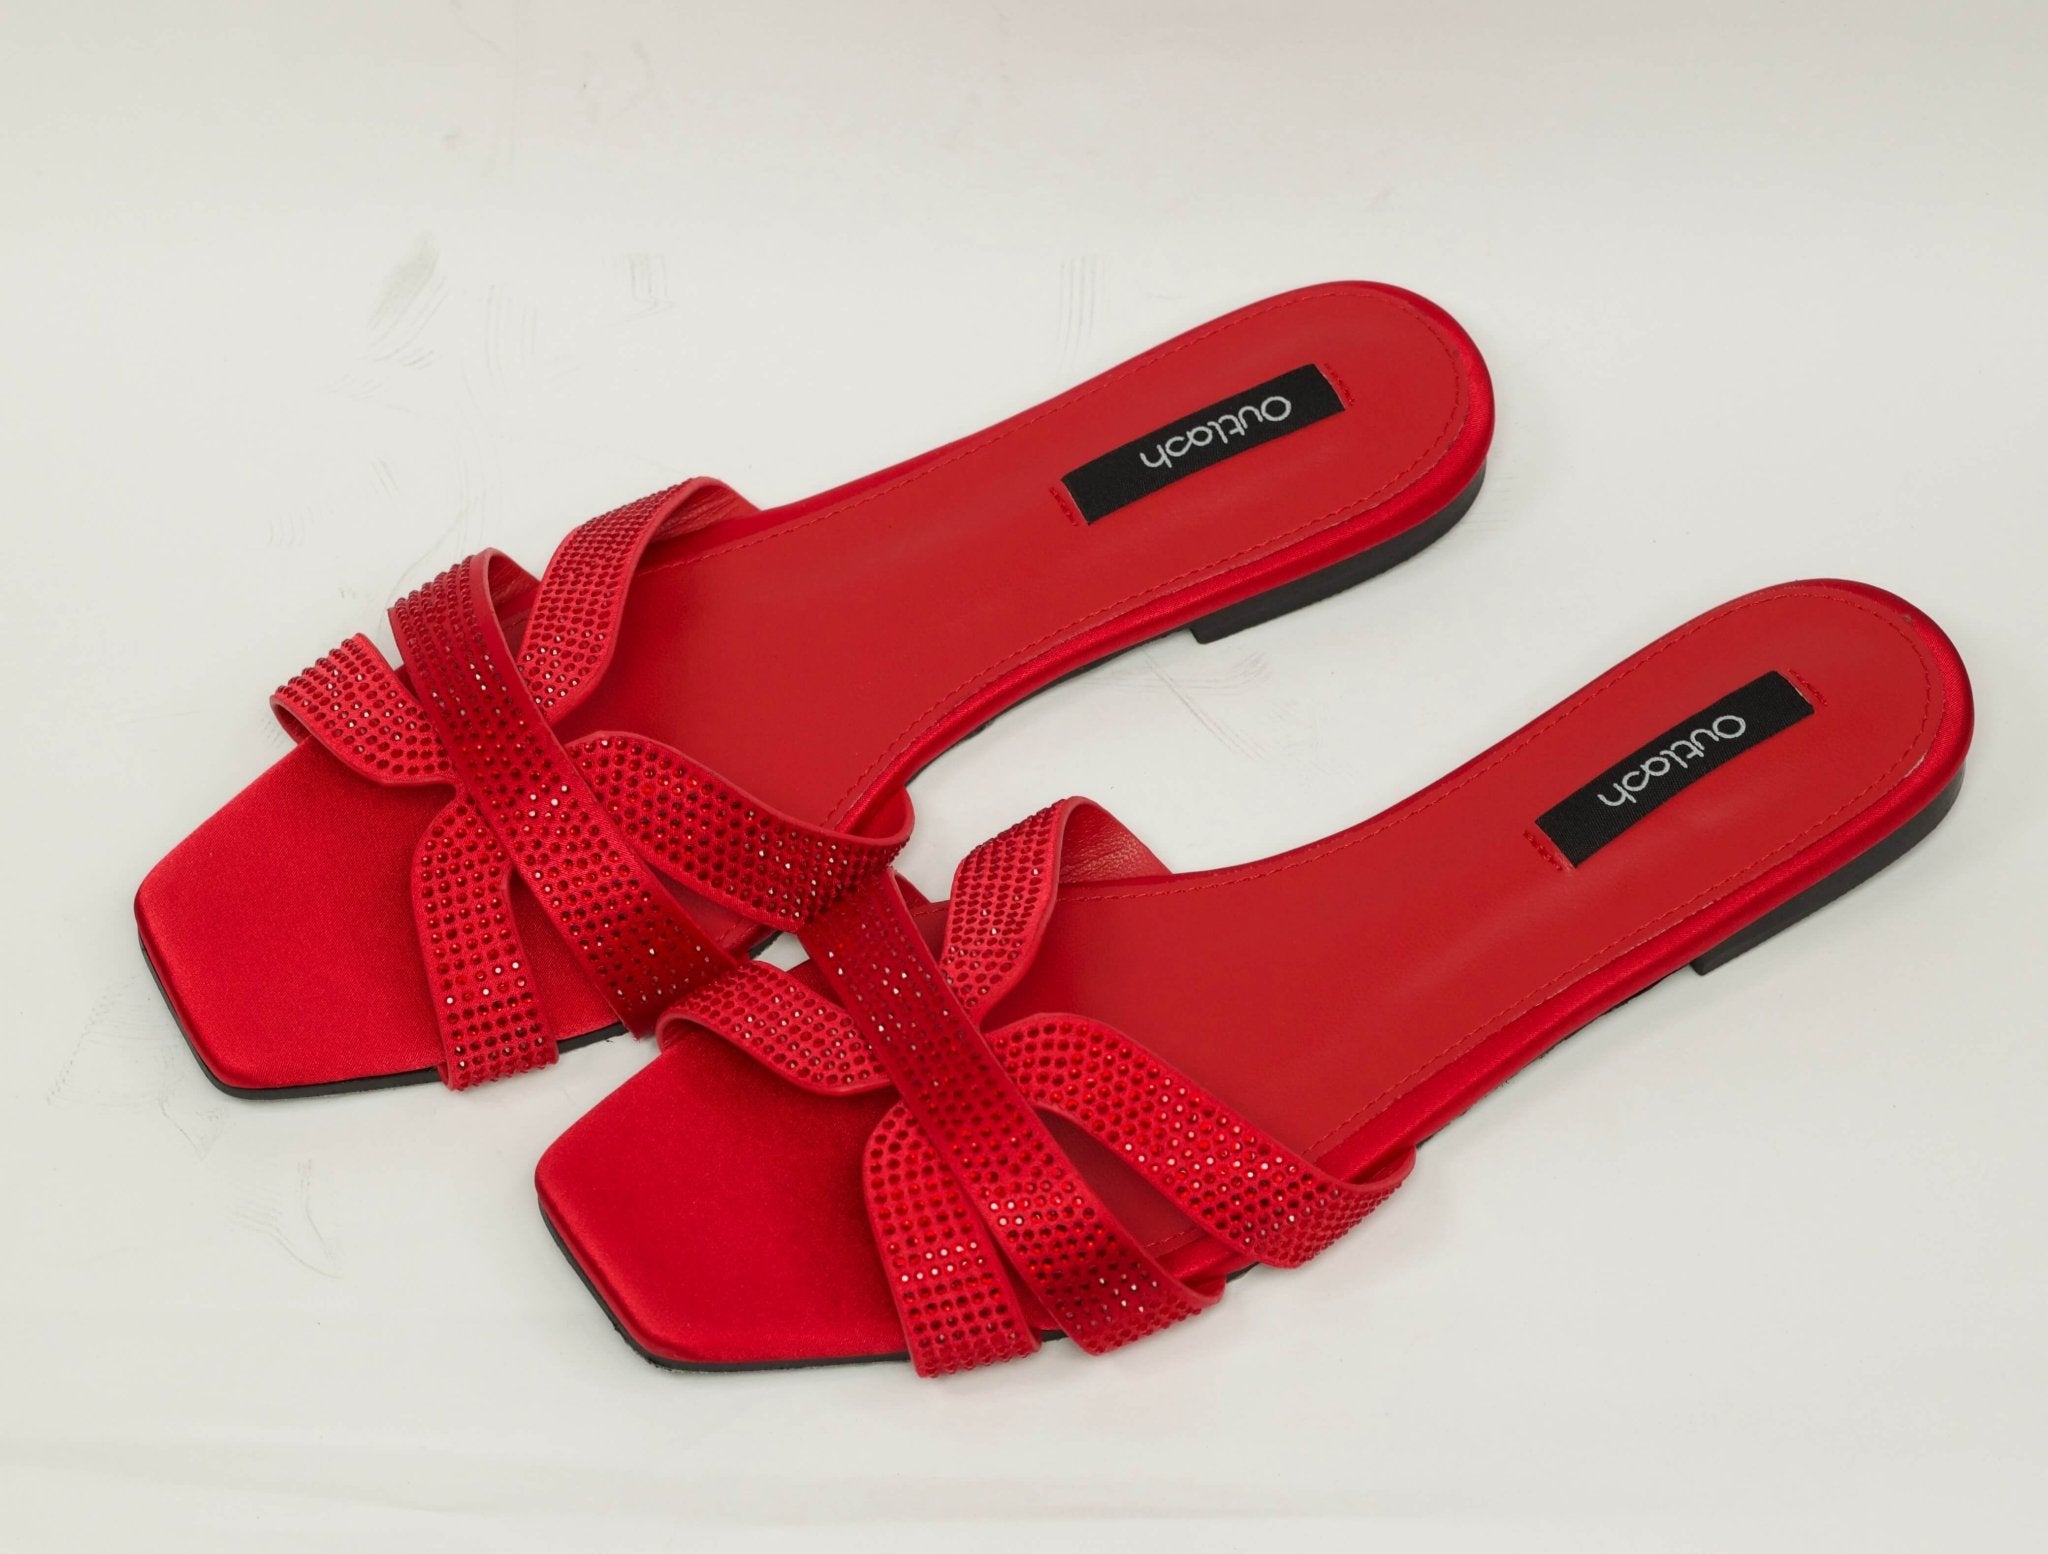 Glint Slides in Red - Outlash brand